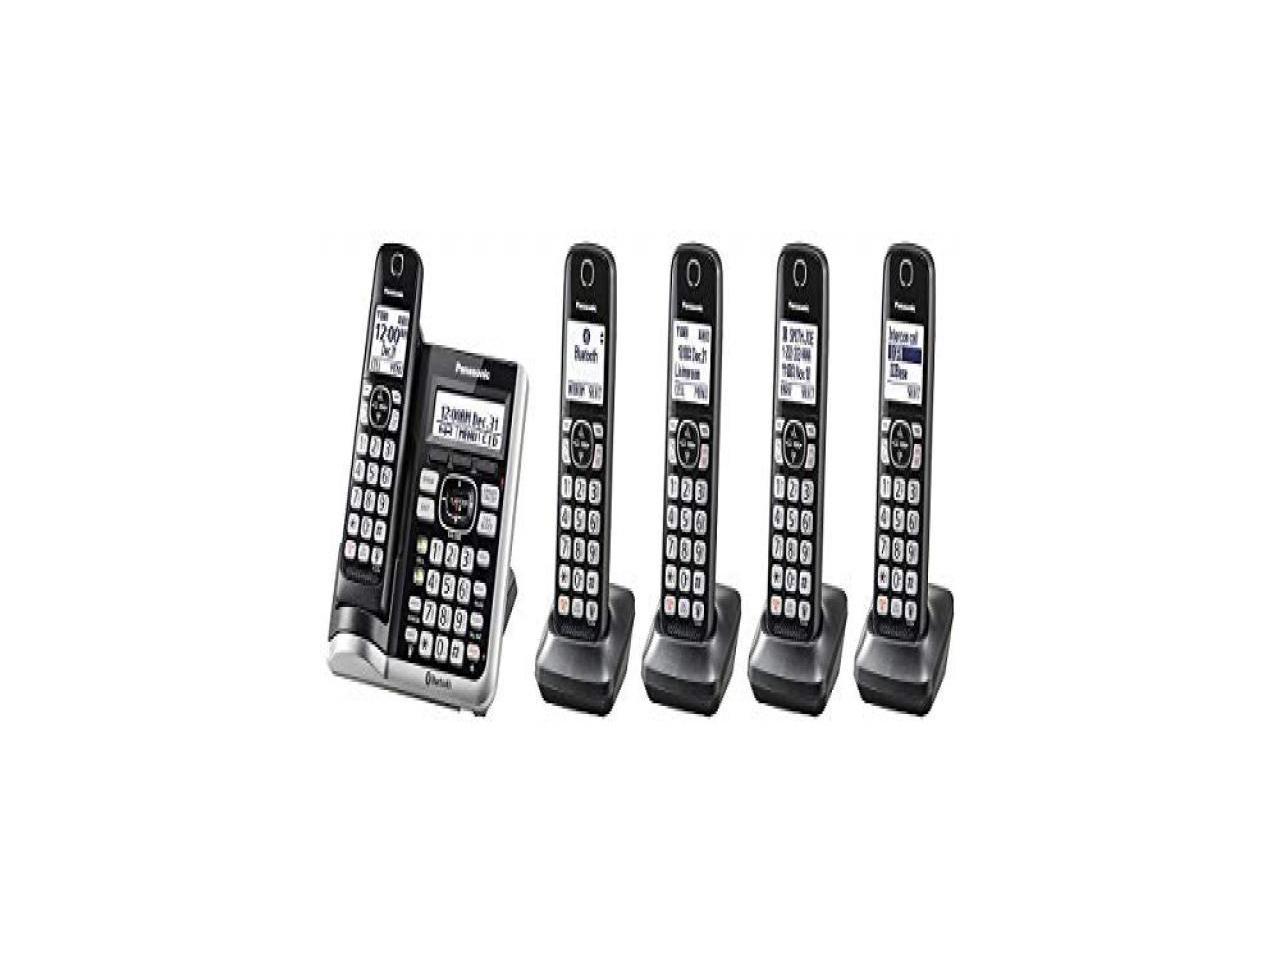 Panasonic KX-TG3645B Expandable Cordless Phone System with Answering Machine 